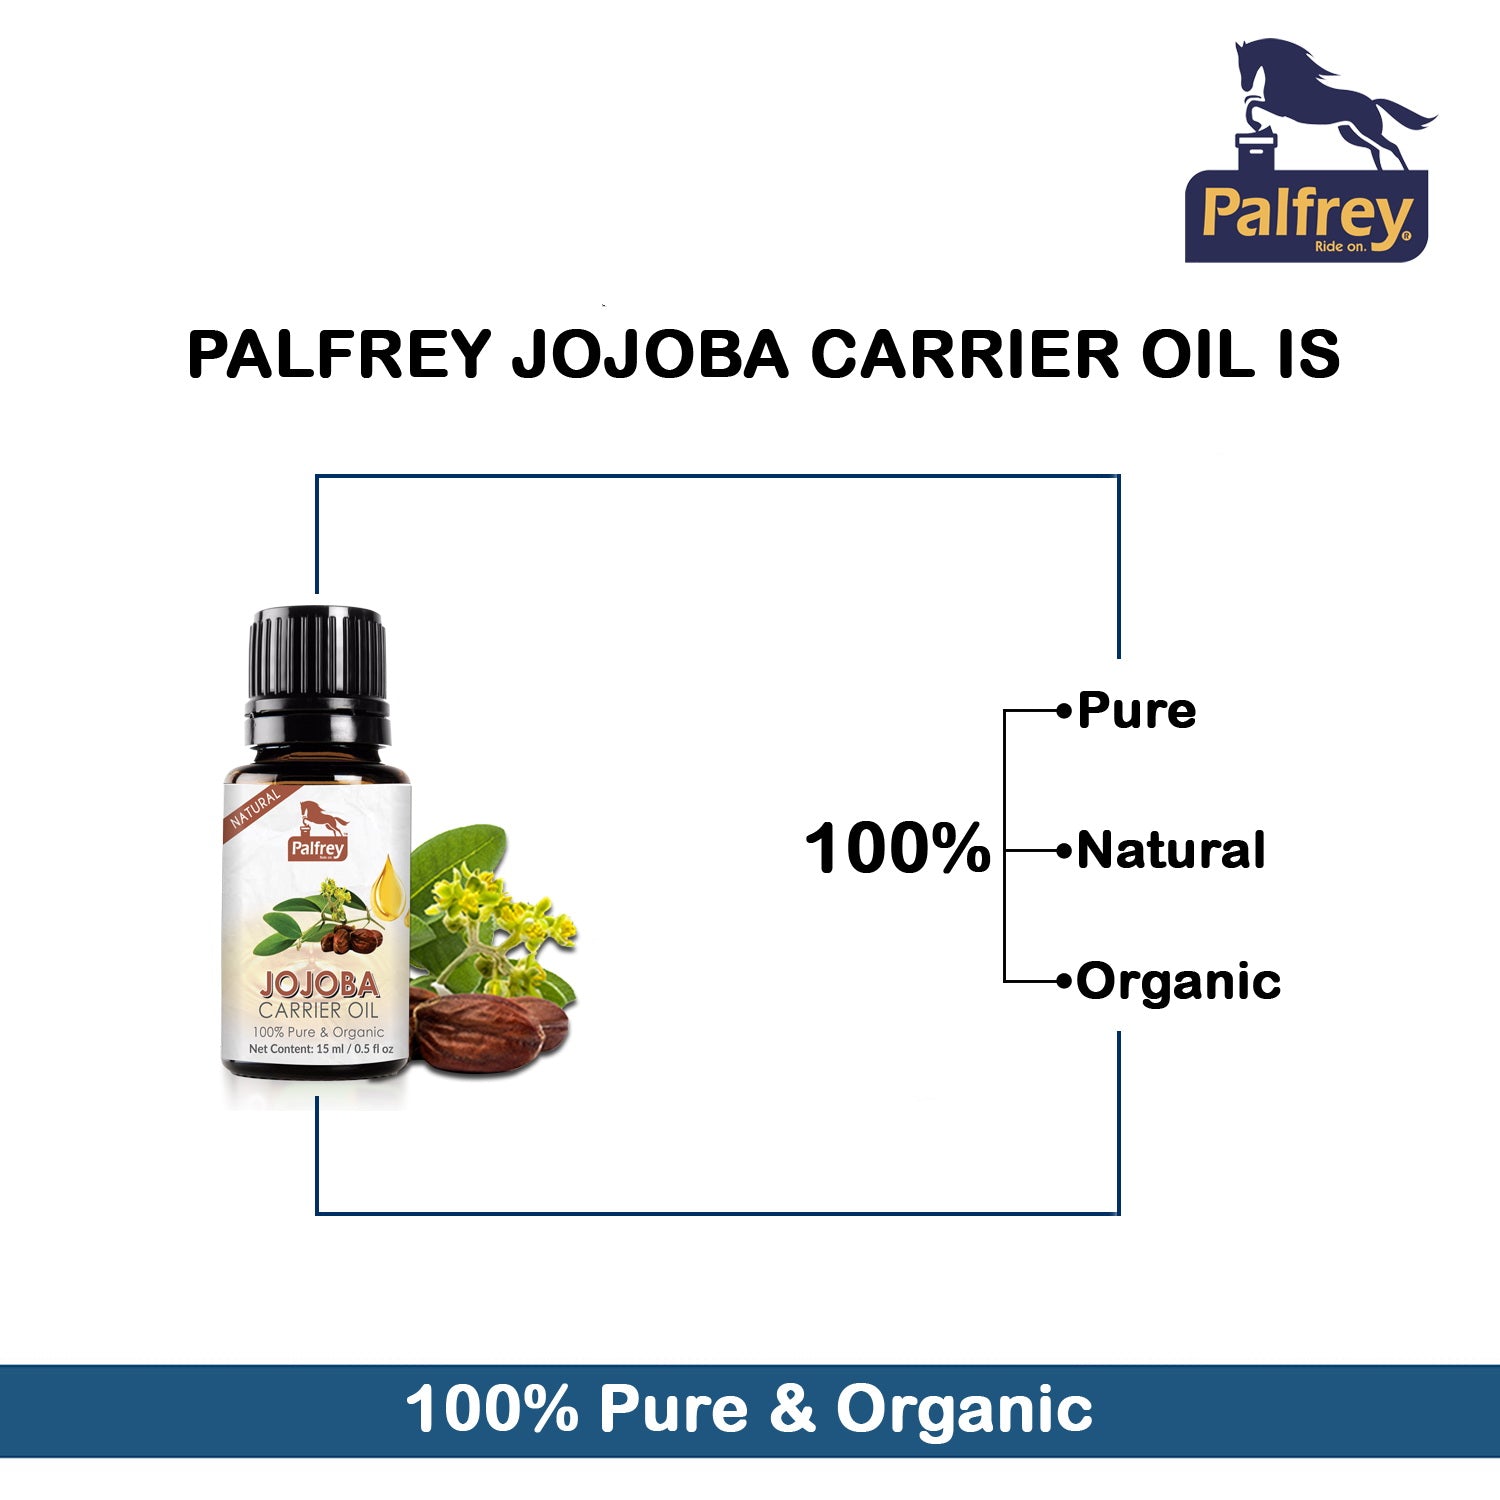 Palfrey Jojoba Carrier Oil 15ml